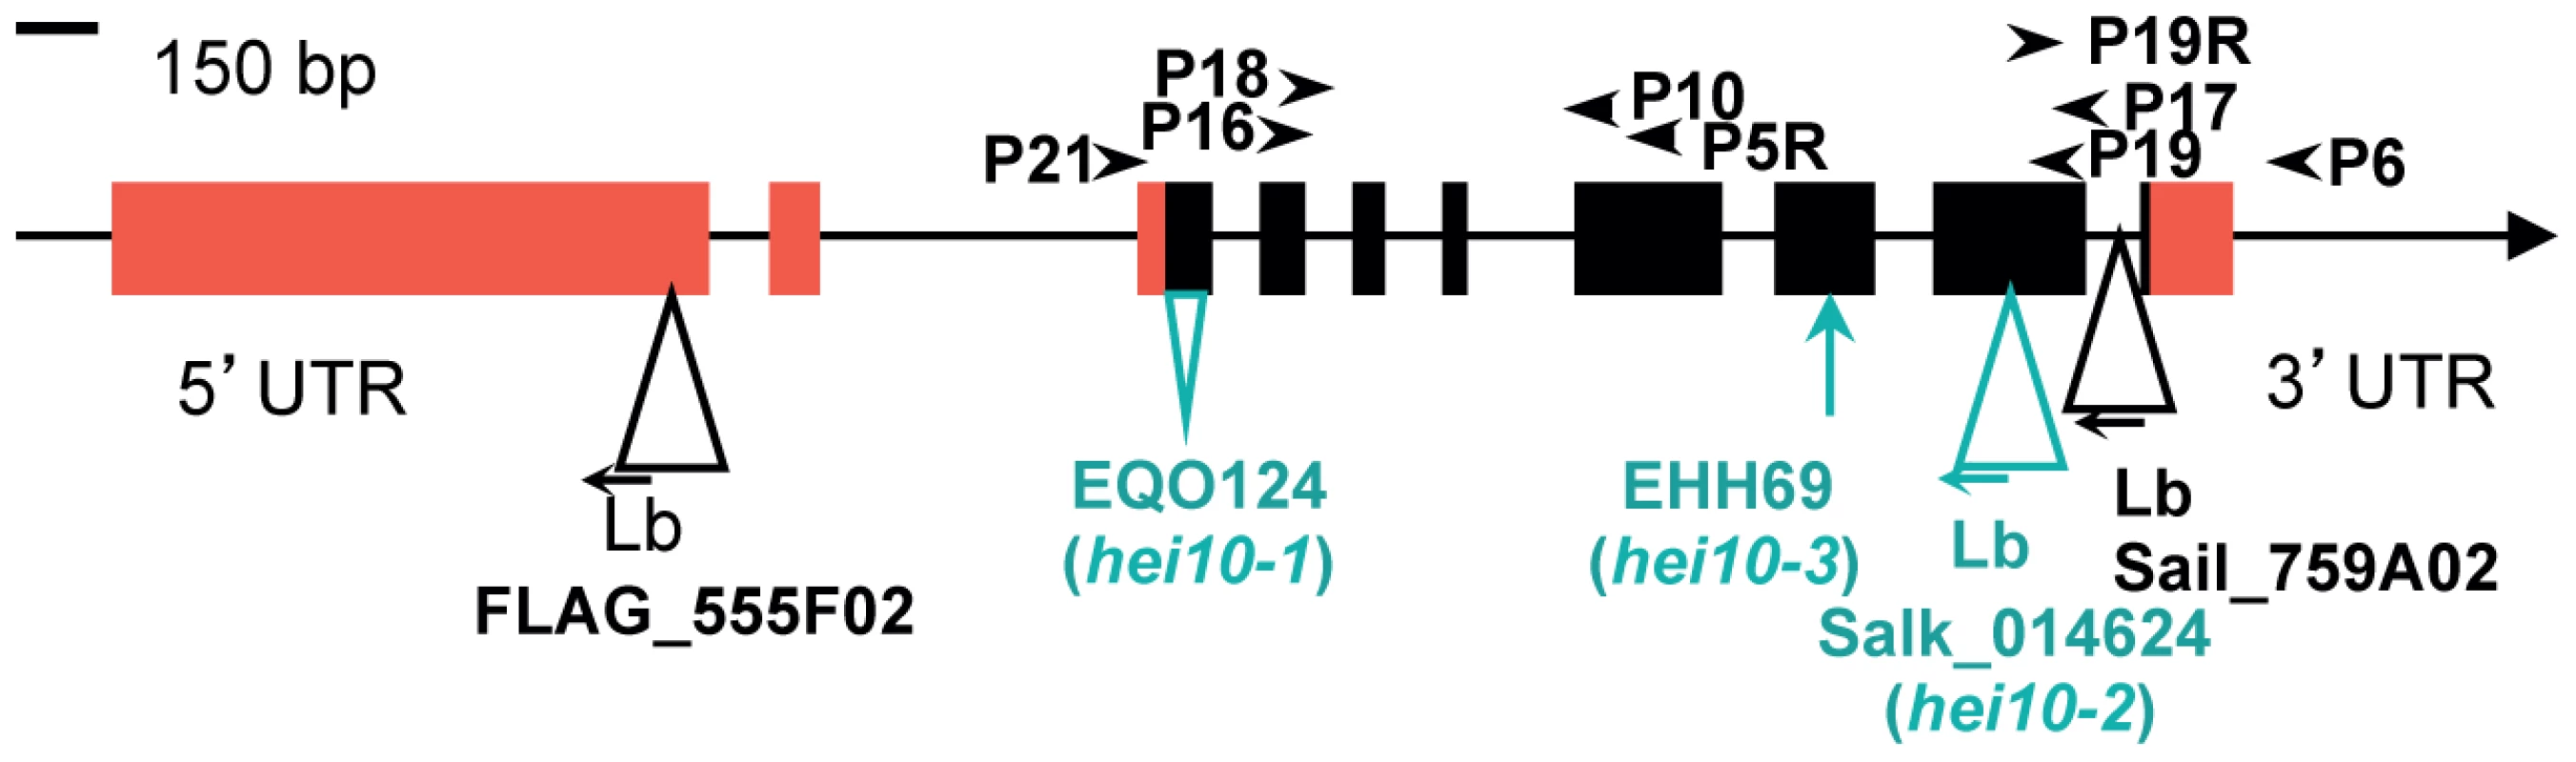 Characterisation of mutations in the HEI10 genomic region.